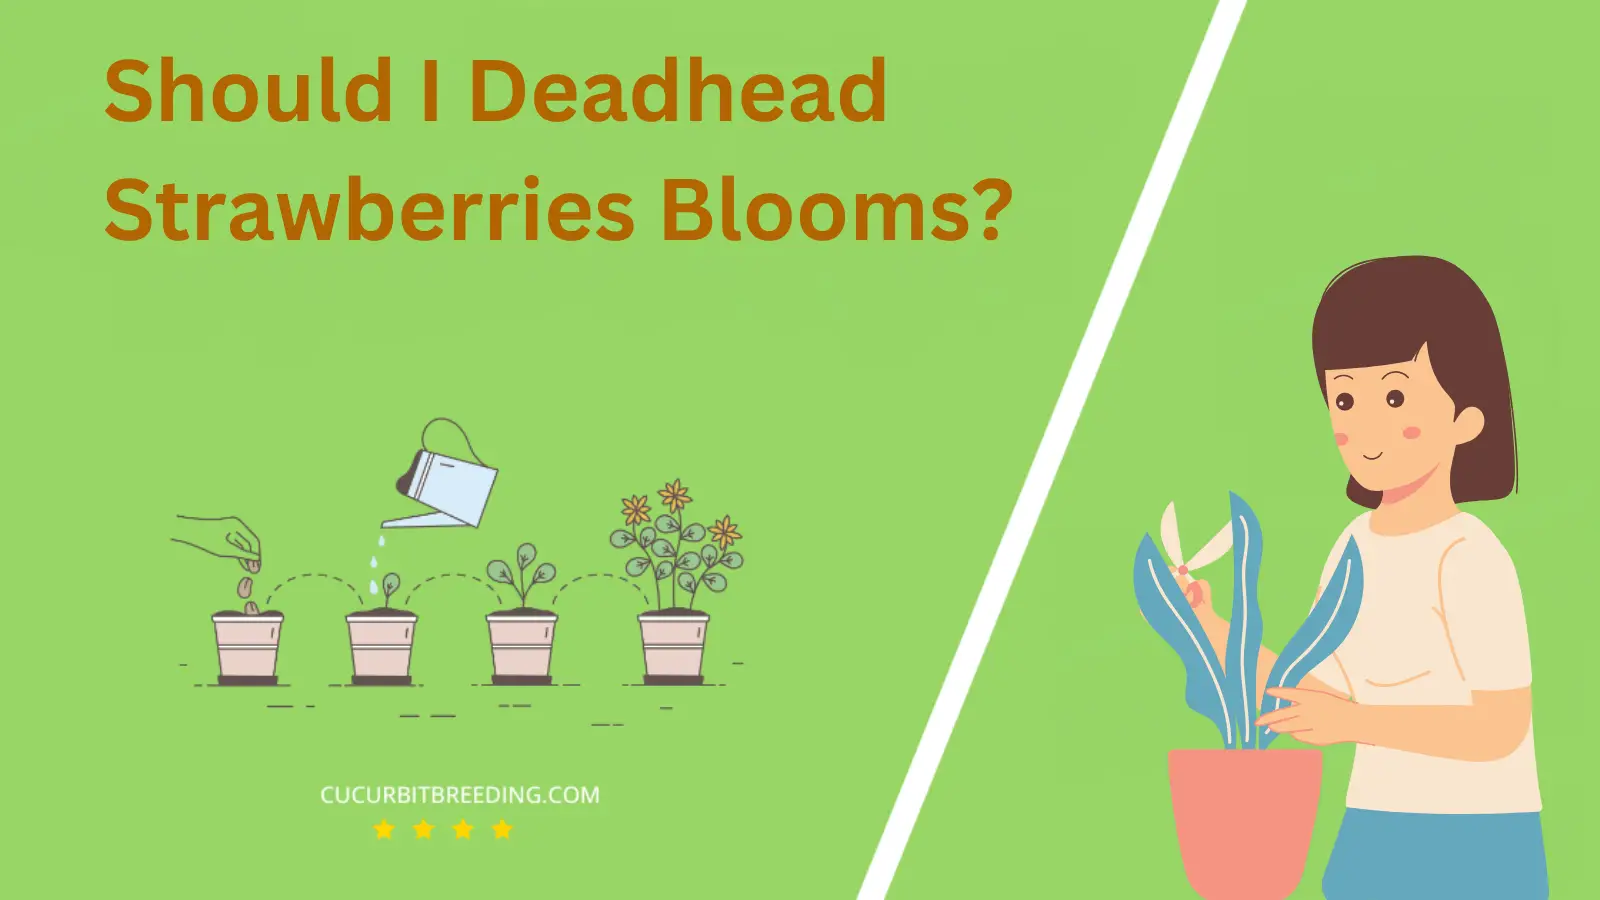 Should I Deadhead Strawberries Blooms?